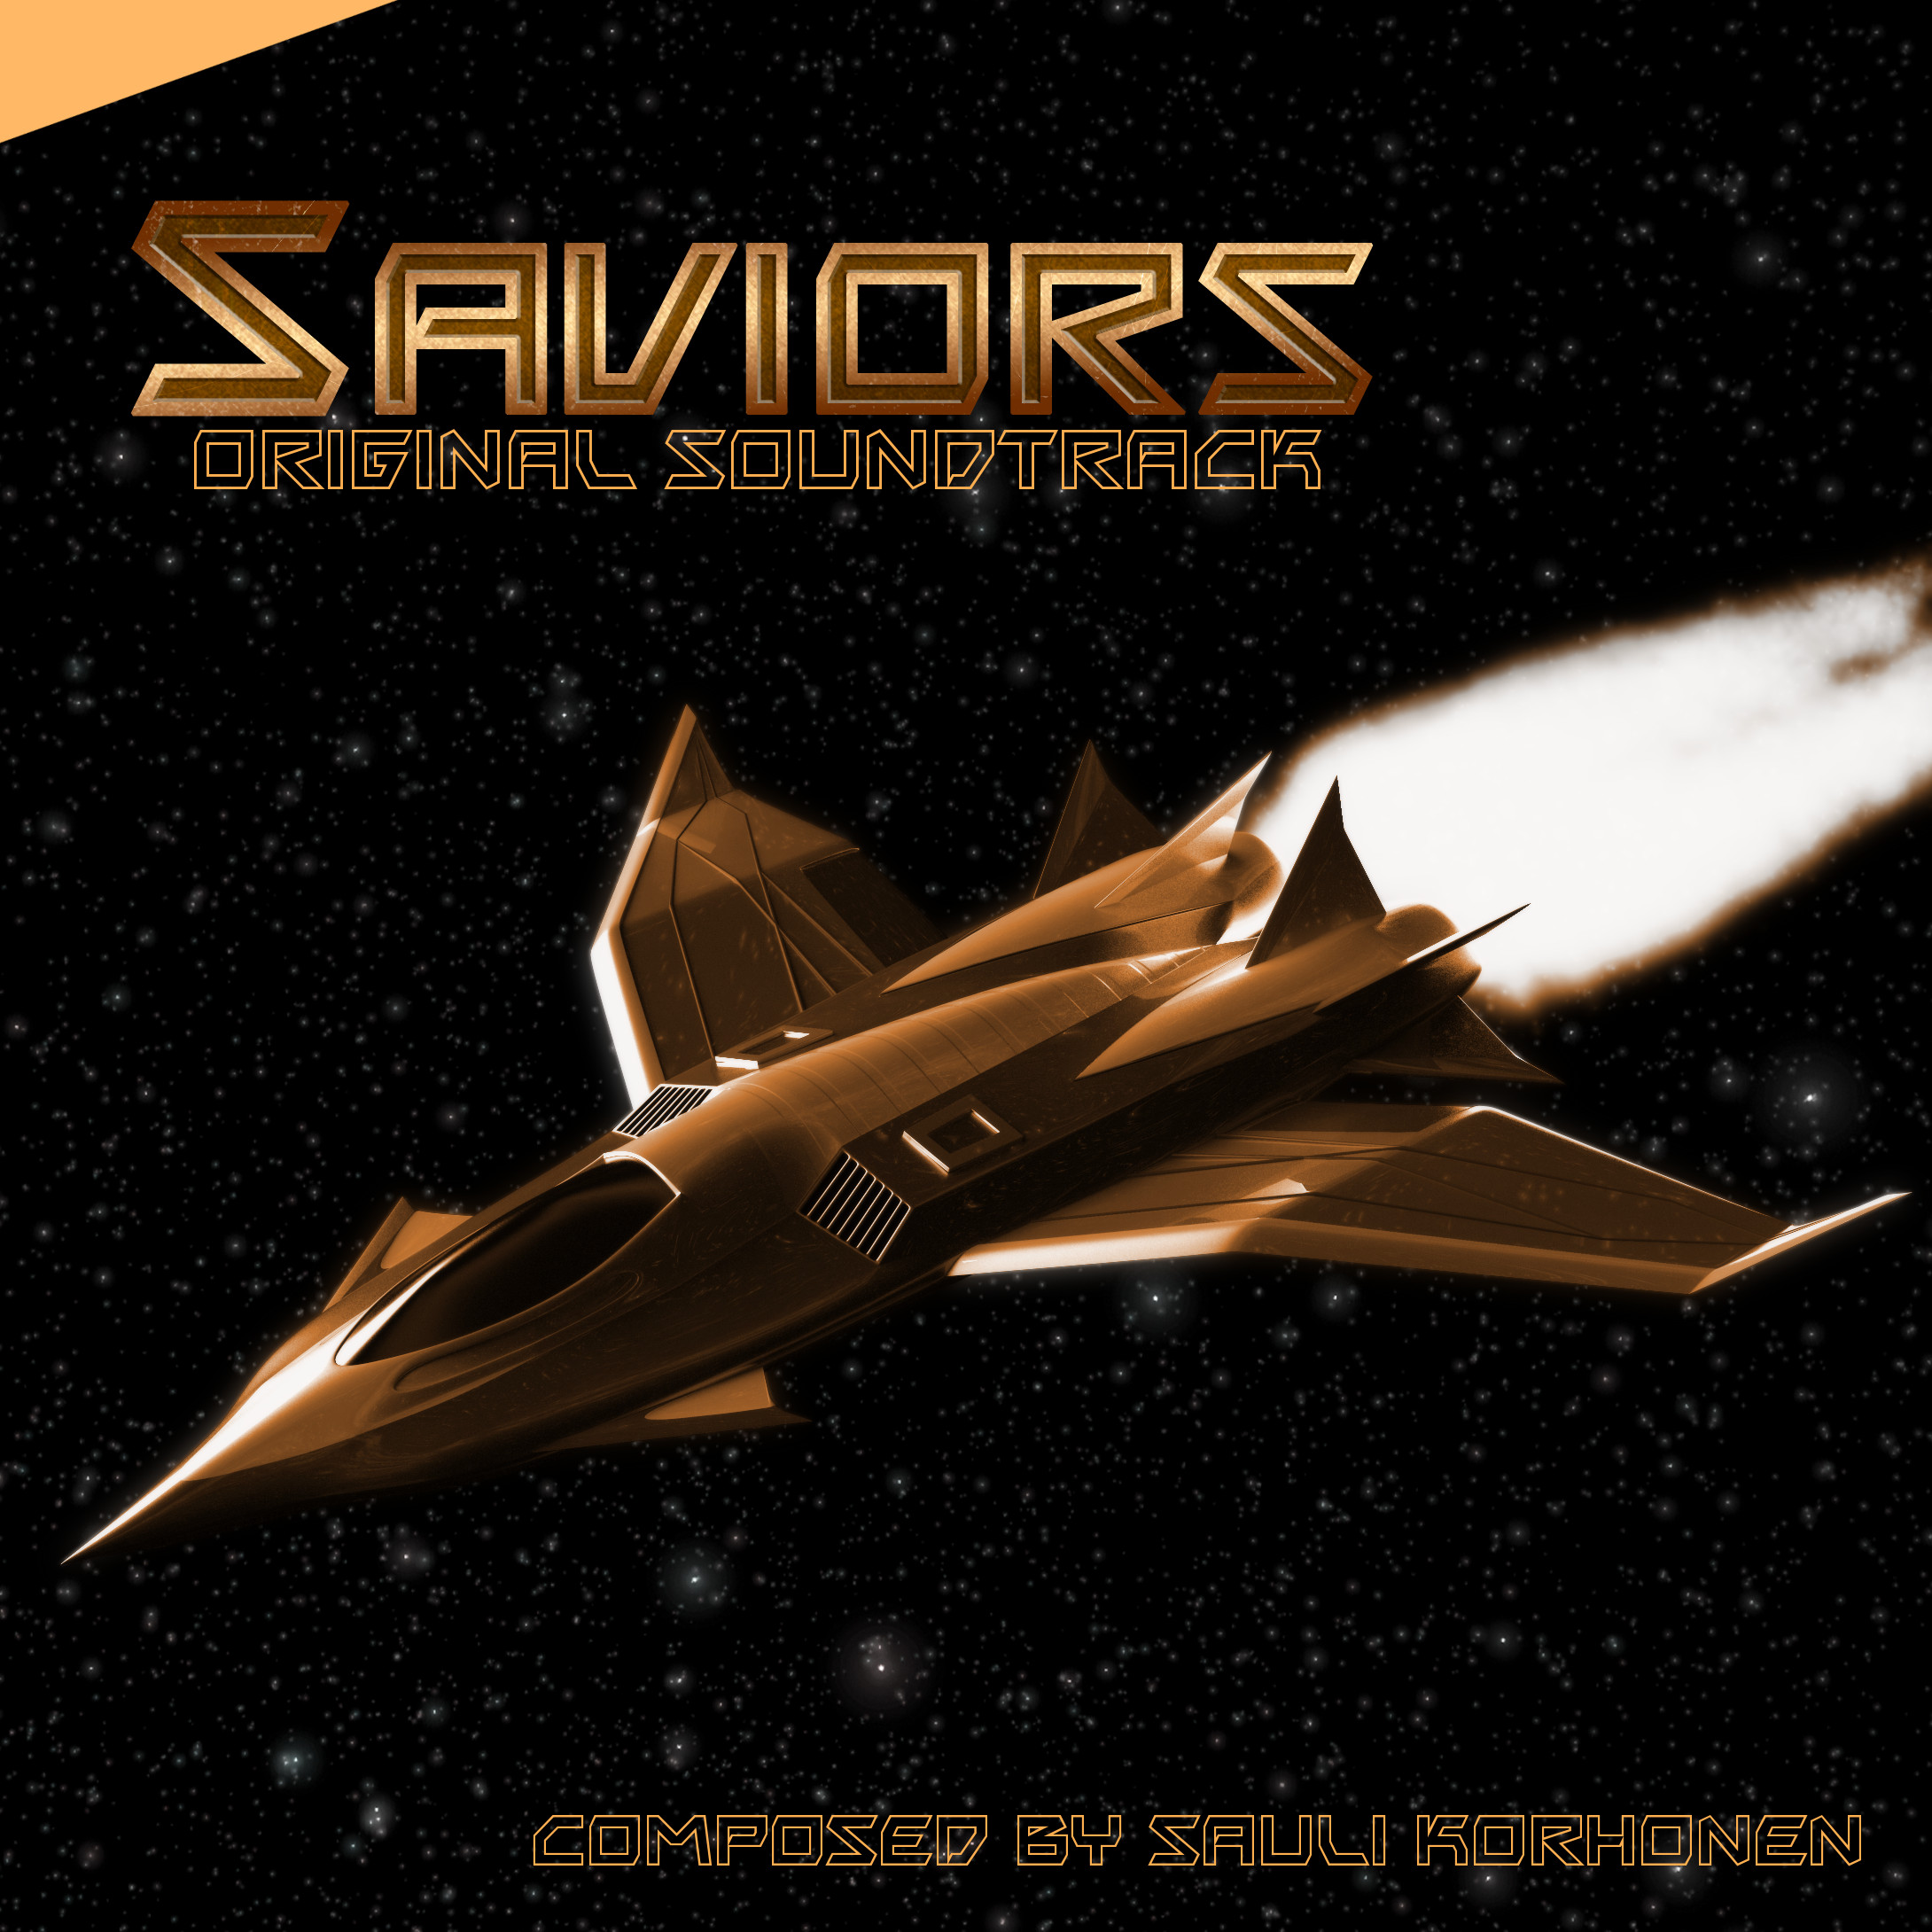 Star Saviors - Saviors OST DLC Steam Gift 21.46$